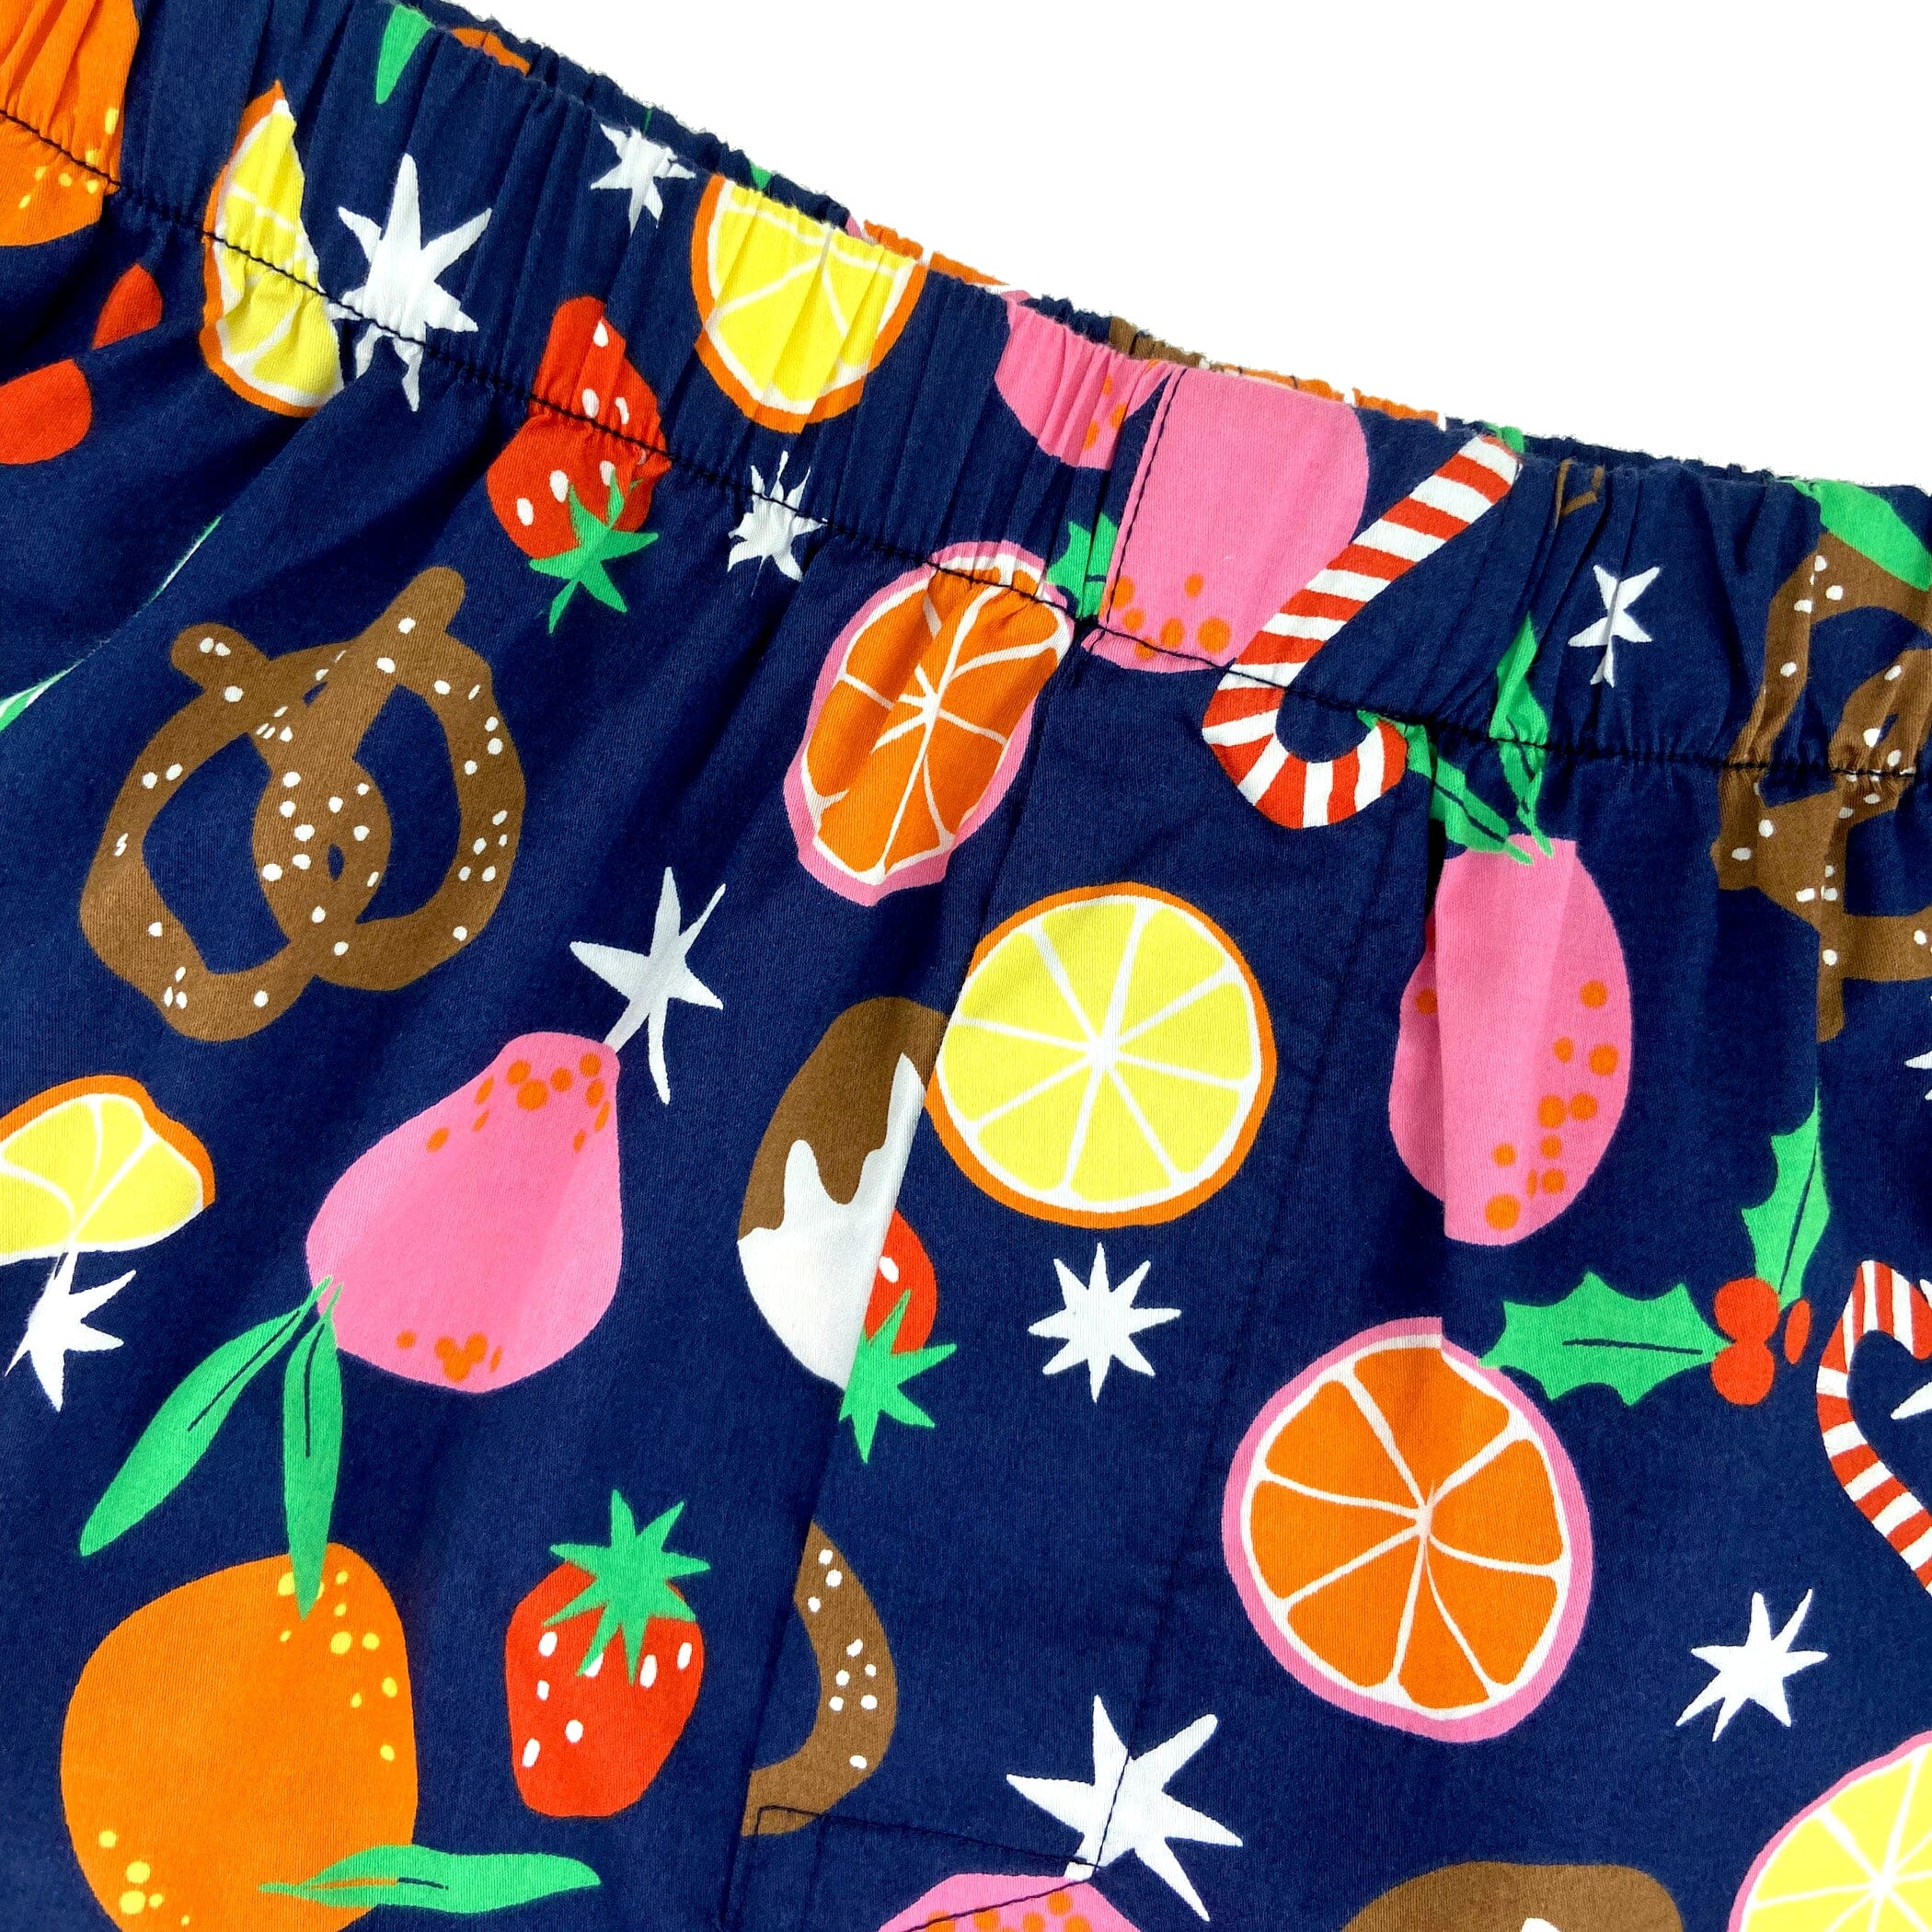 Men's Festive Christmas Holiday Fruit Candy Cane Print Boxer Shorts